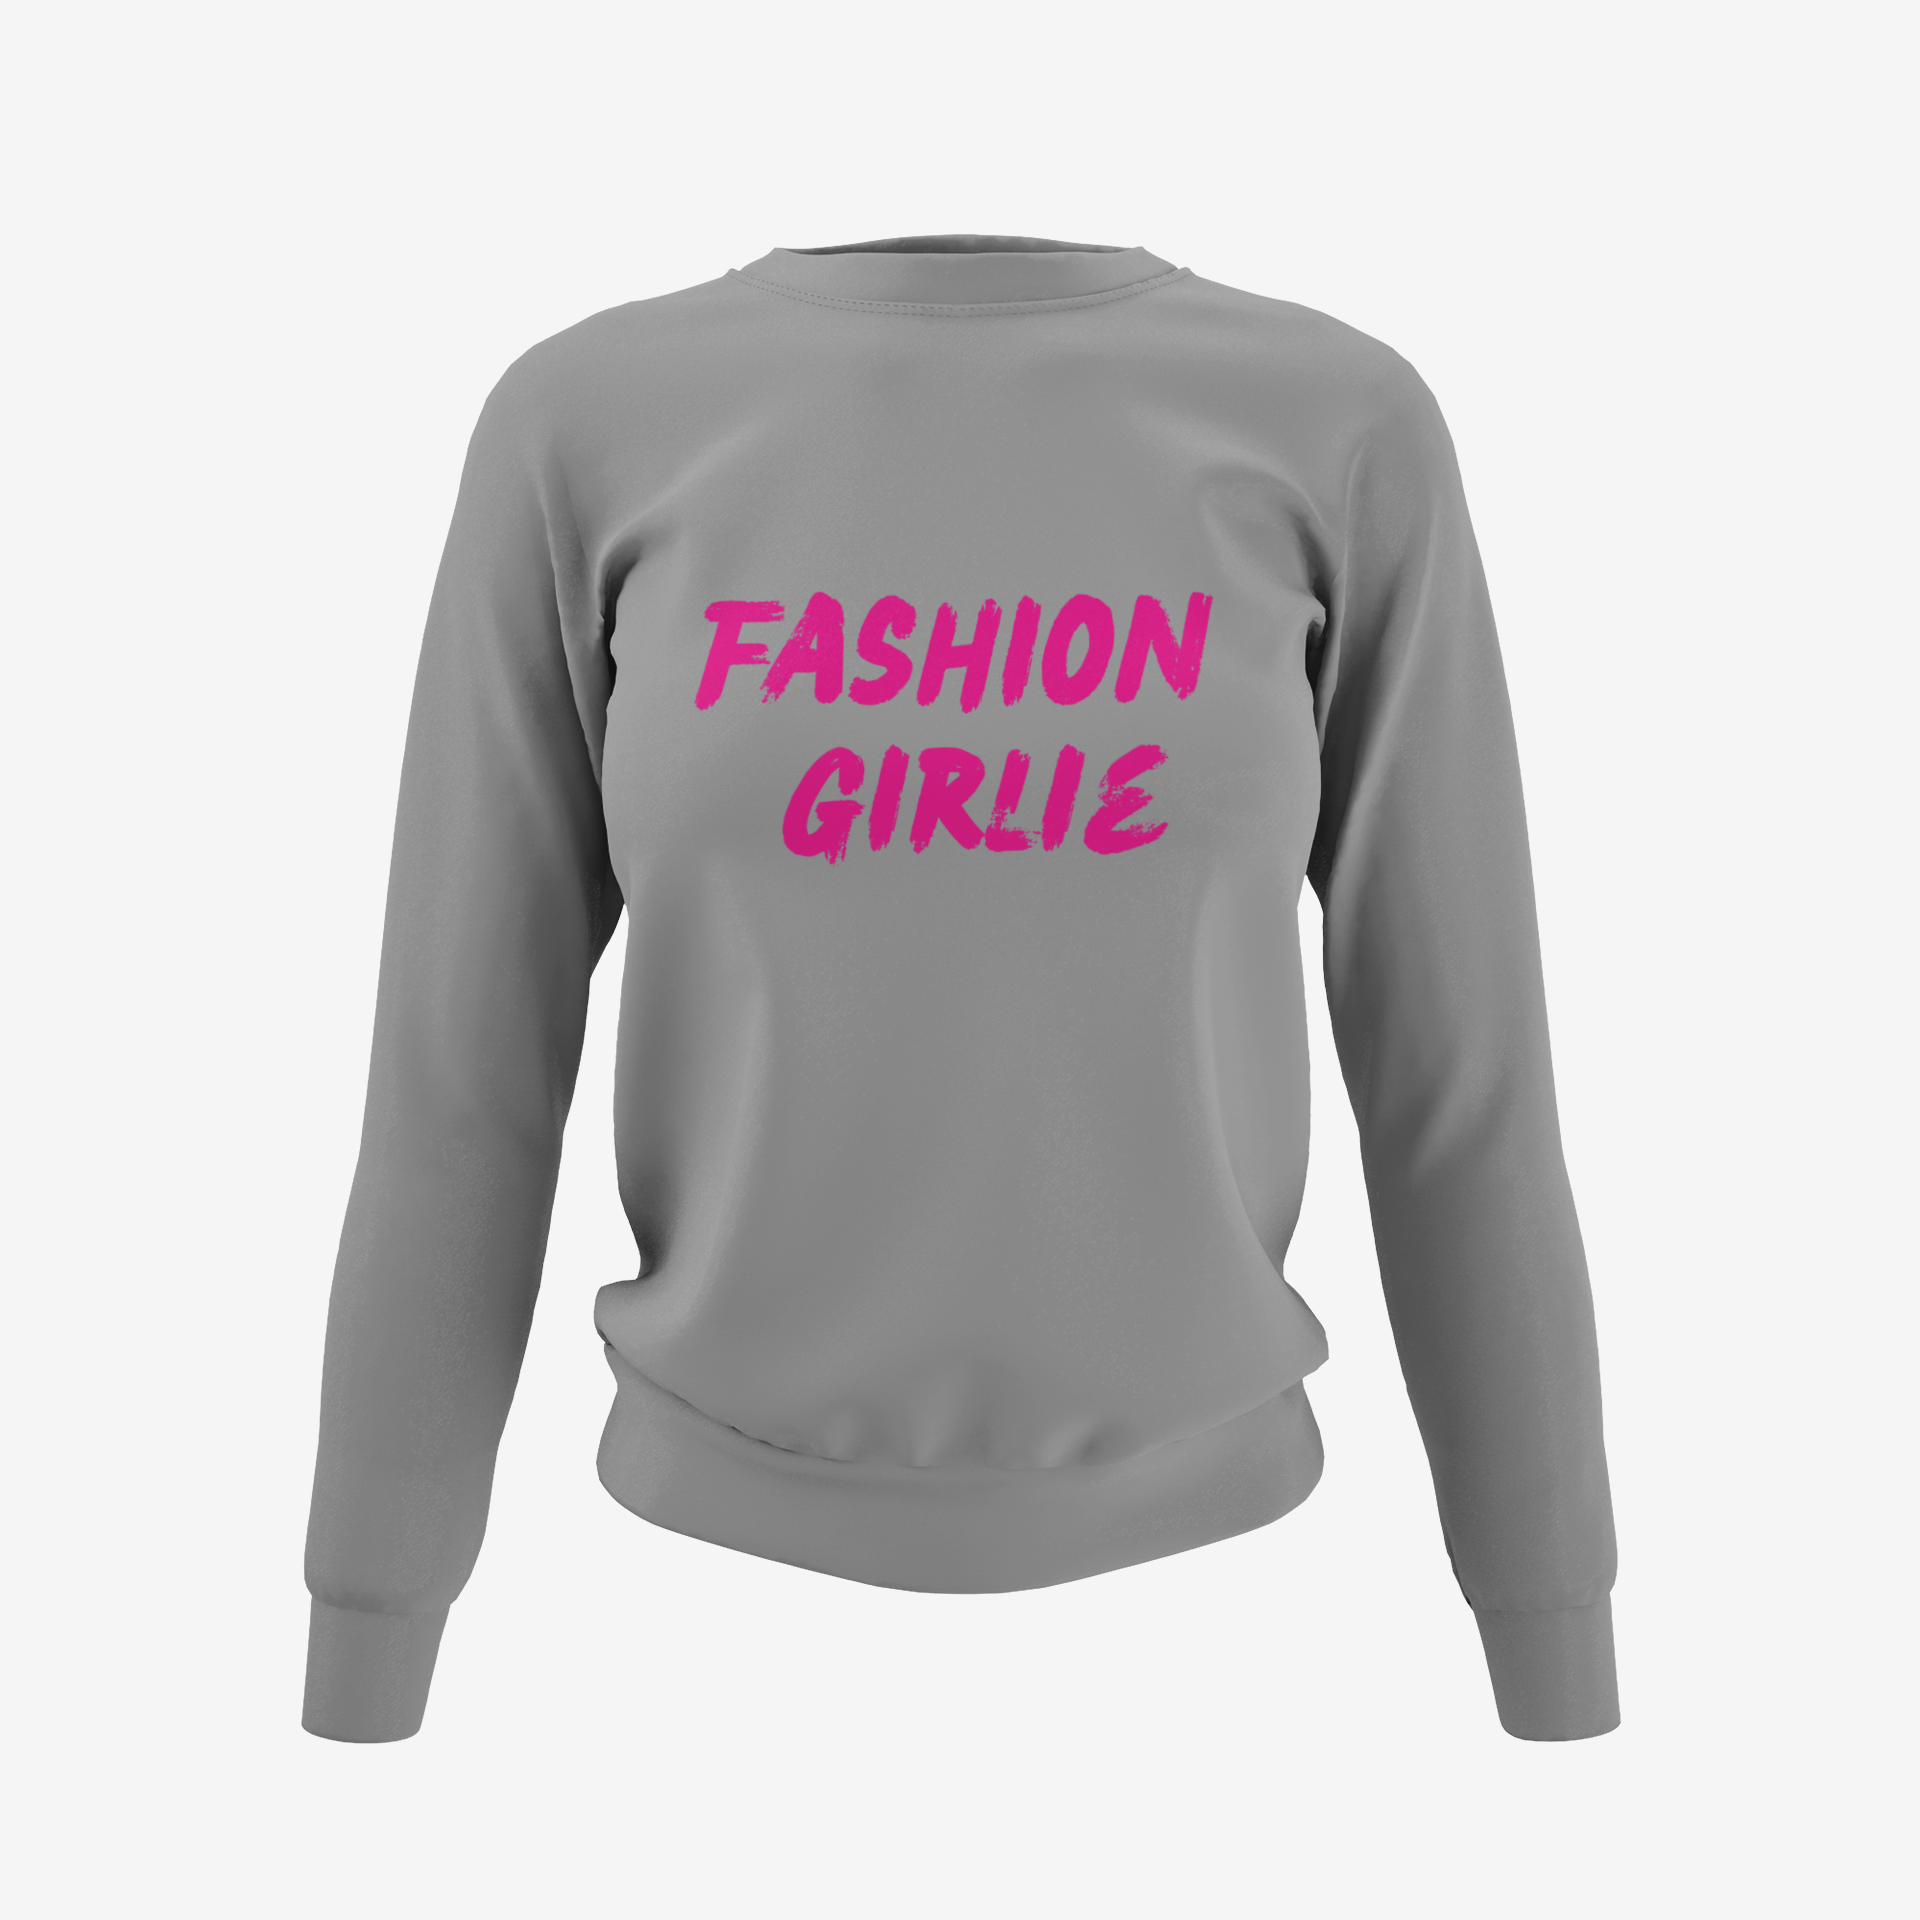 Fashion Girlie Sweatshirt